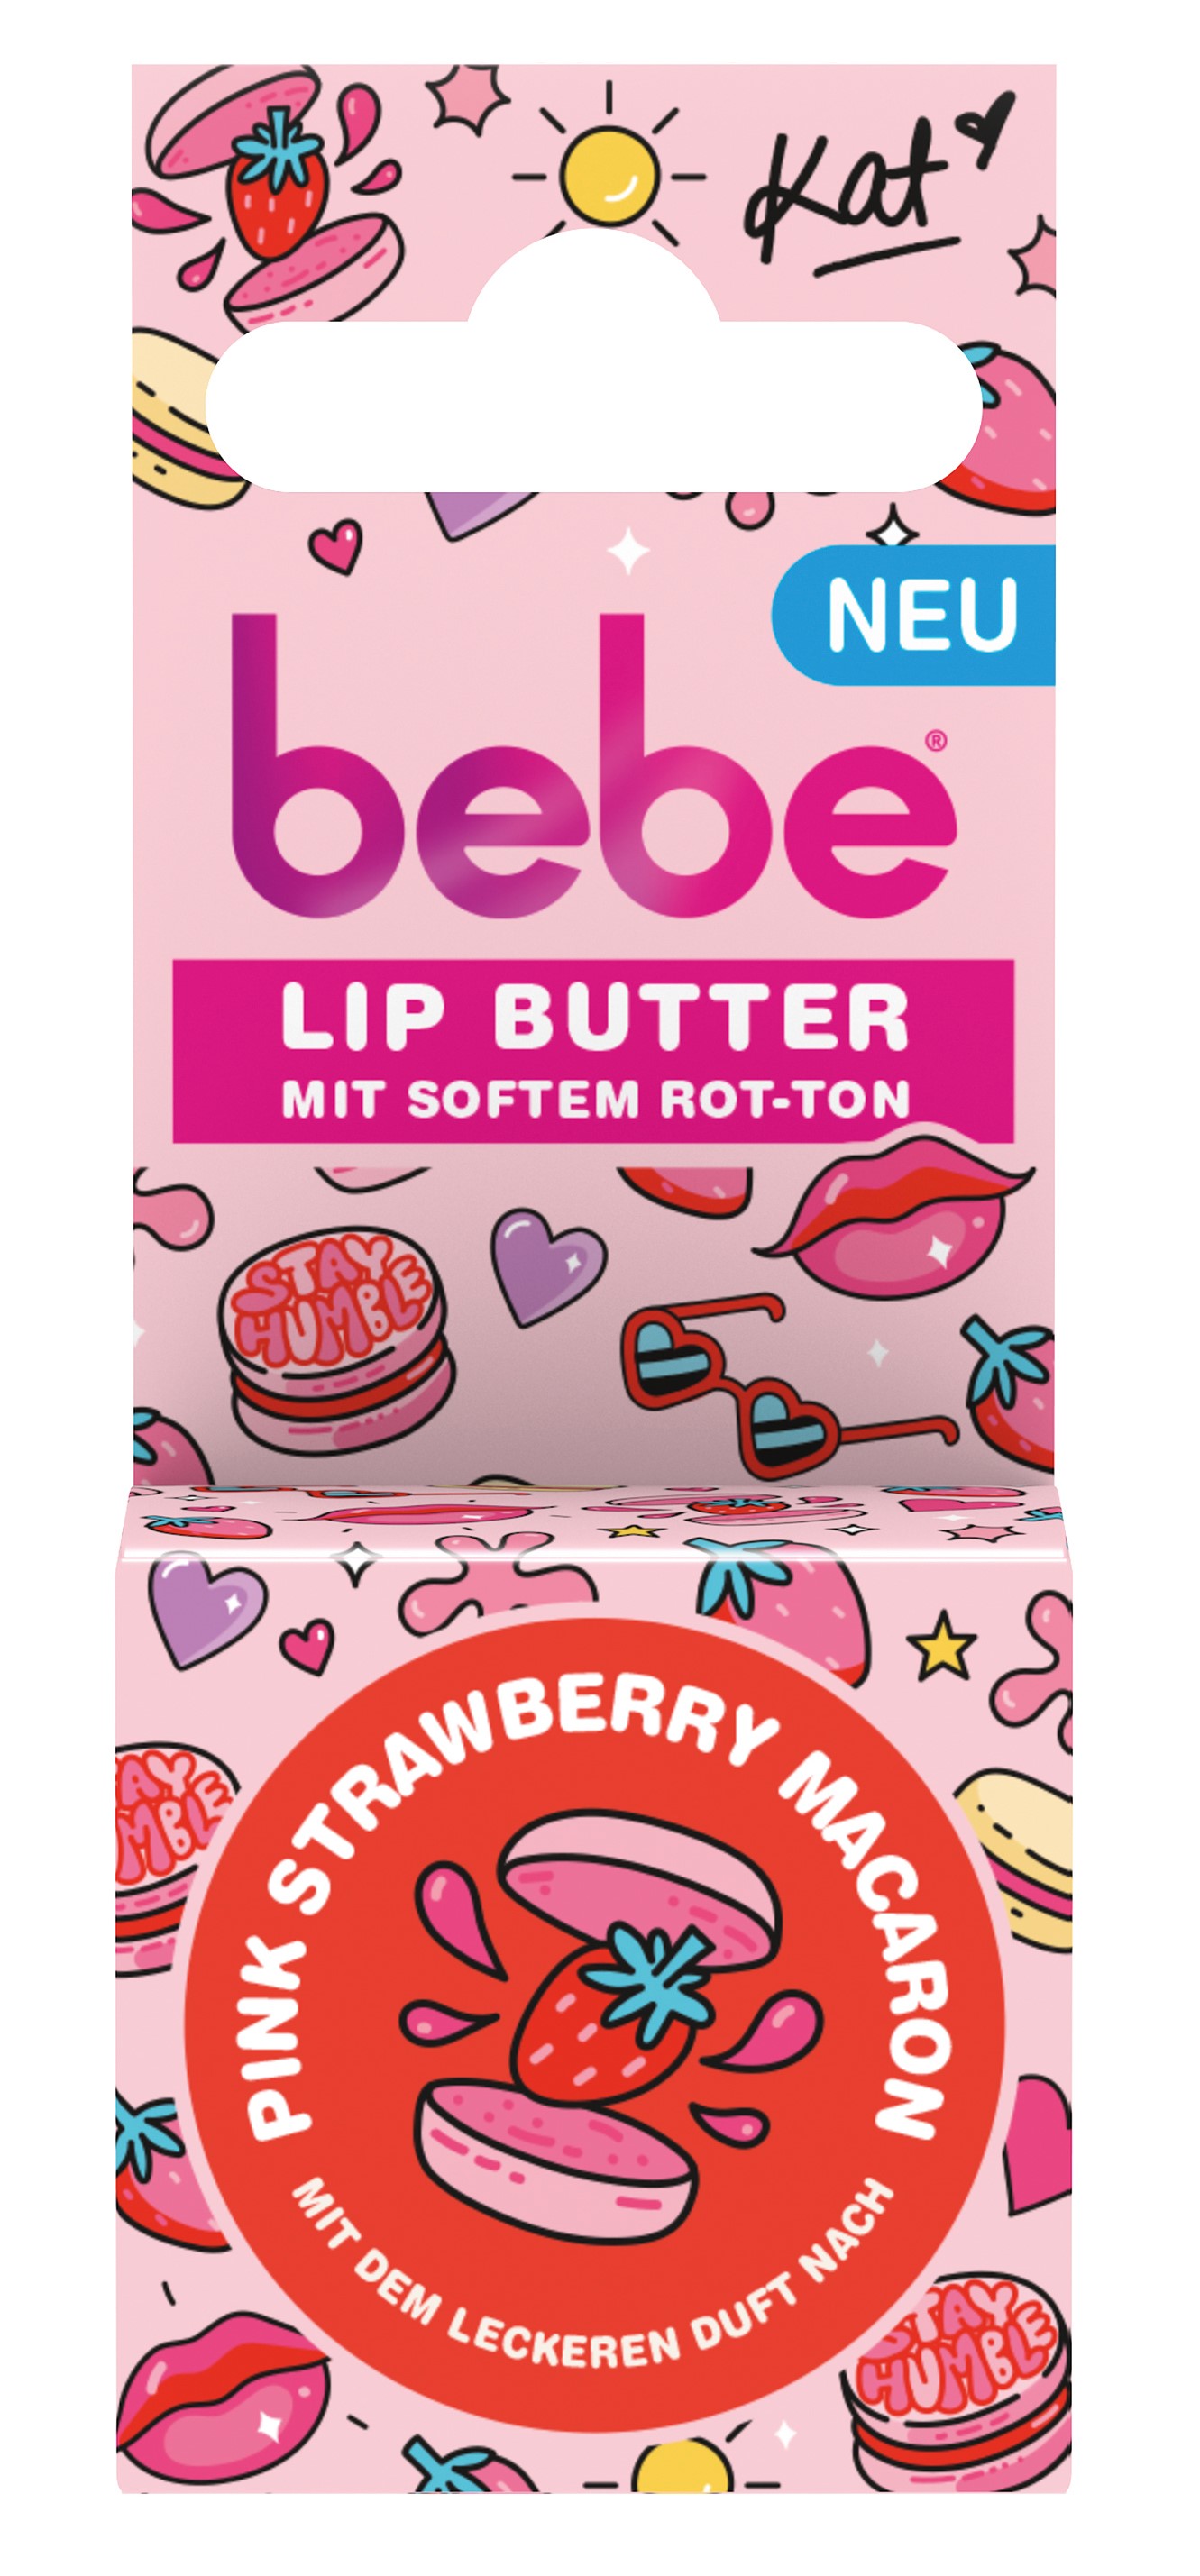 jjbe03.02b bebe lip butter pink strawberry macaron co kreiert by katharina damm 2.99 euro highres